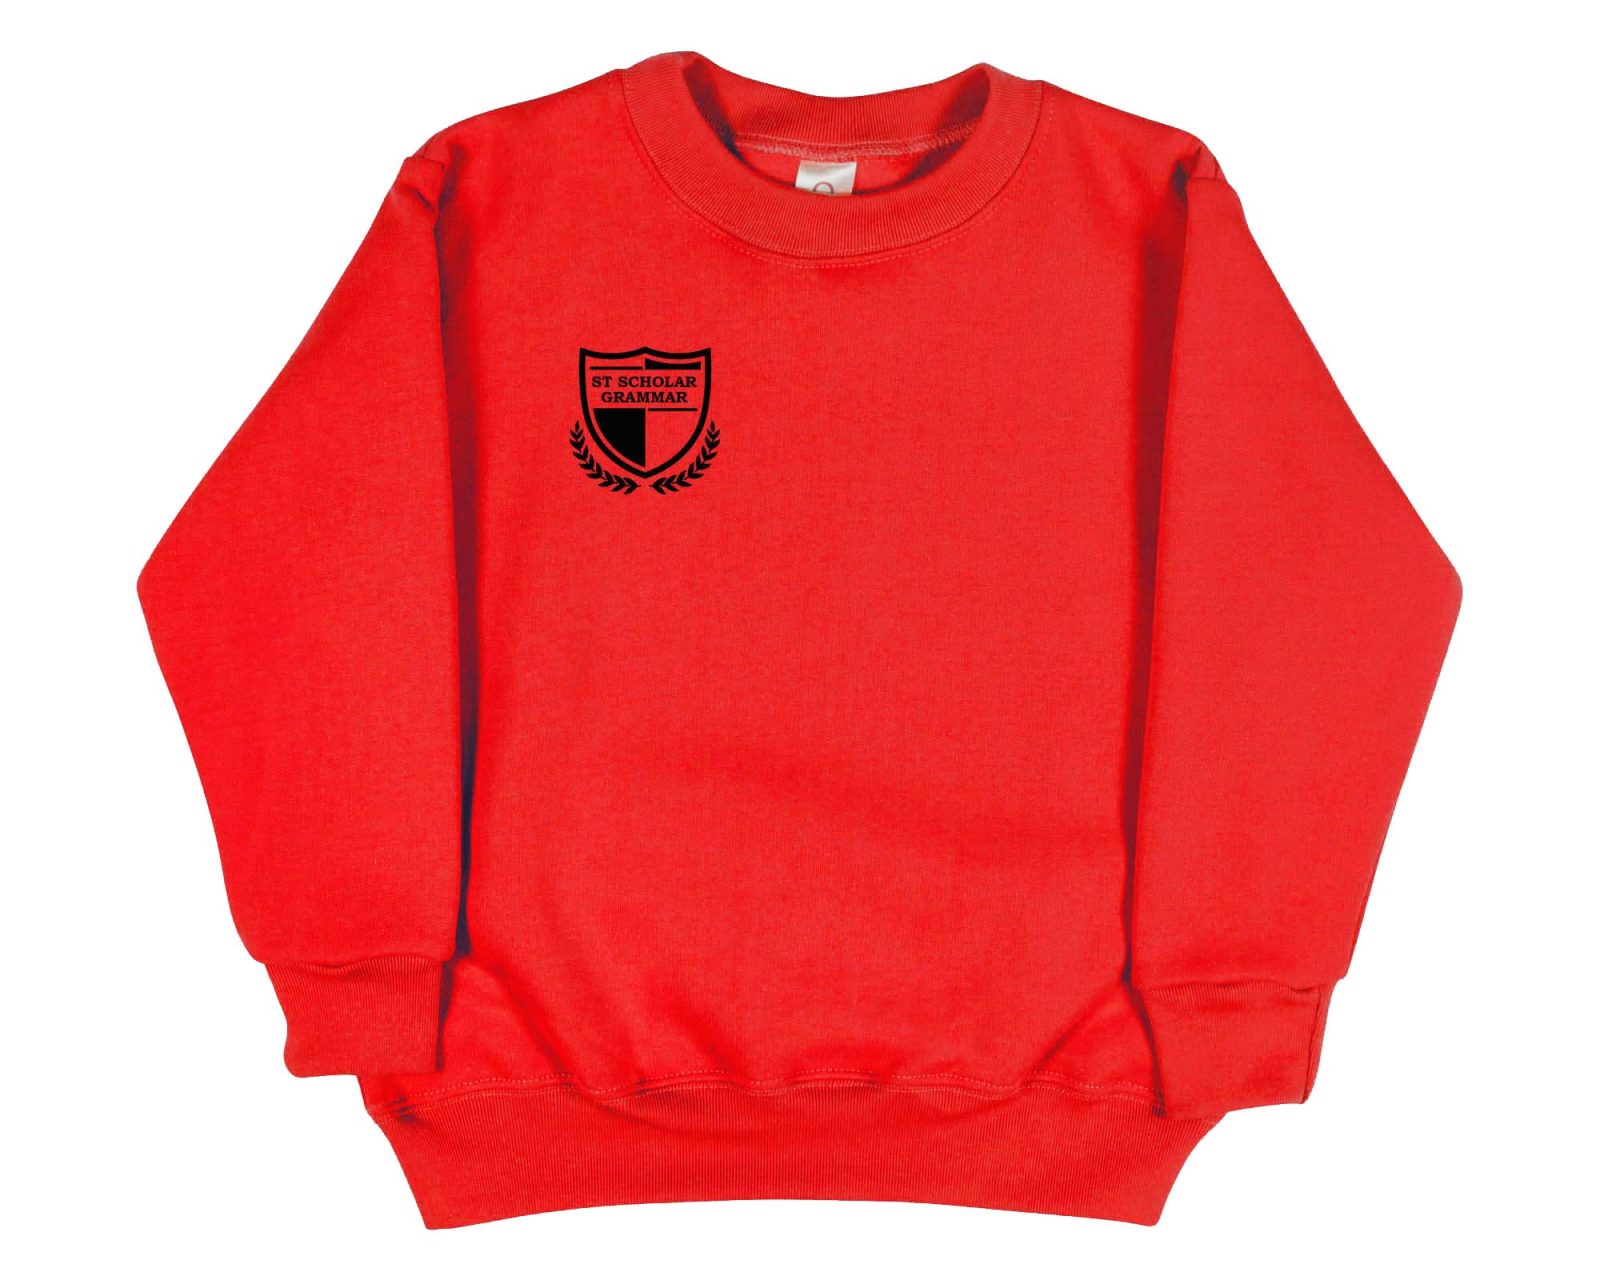 Qualitops-Kids-School-Sweater